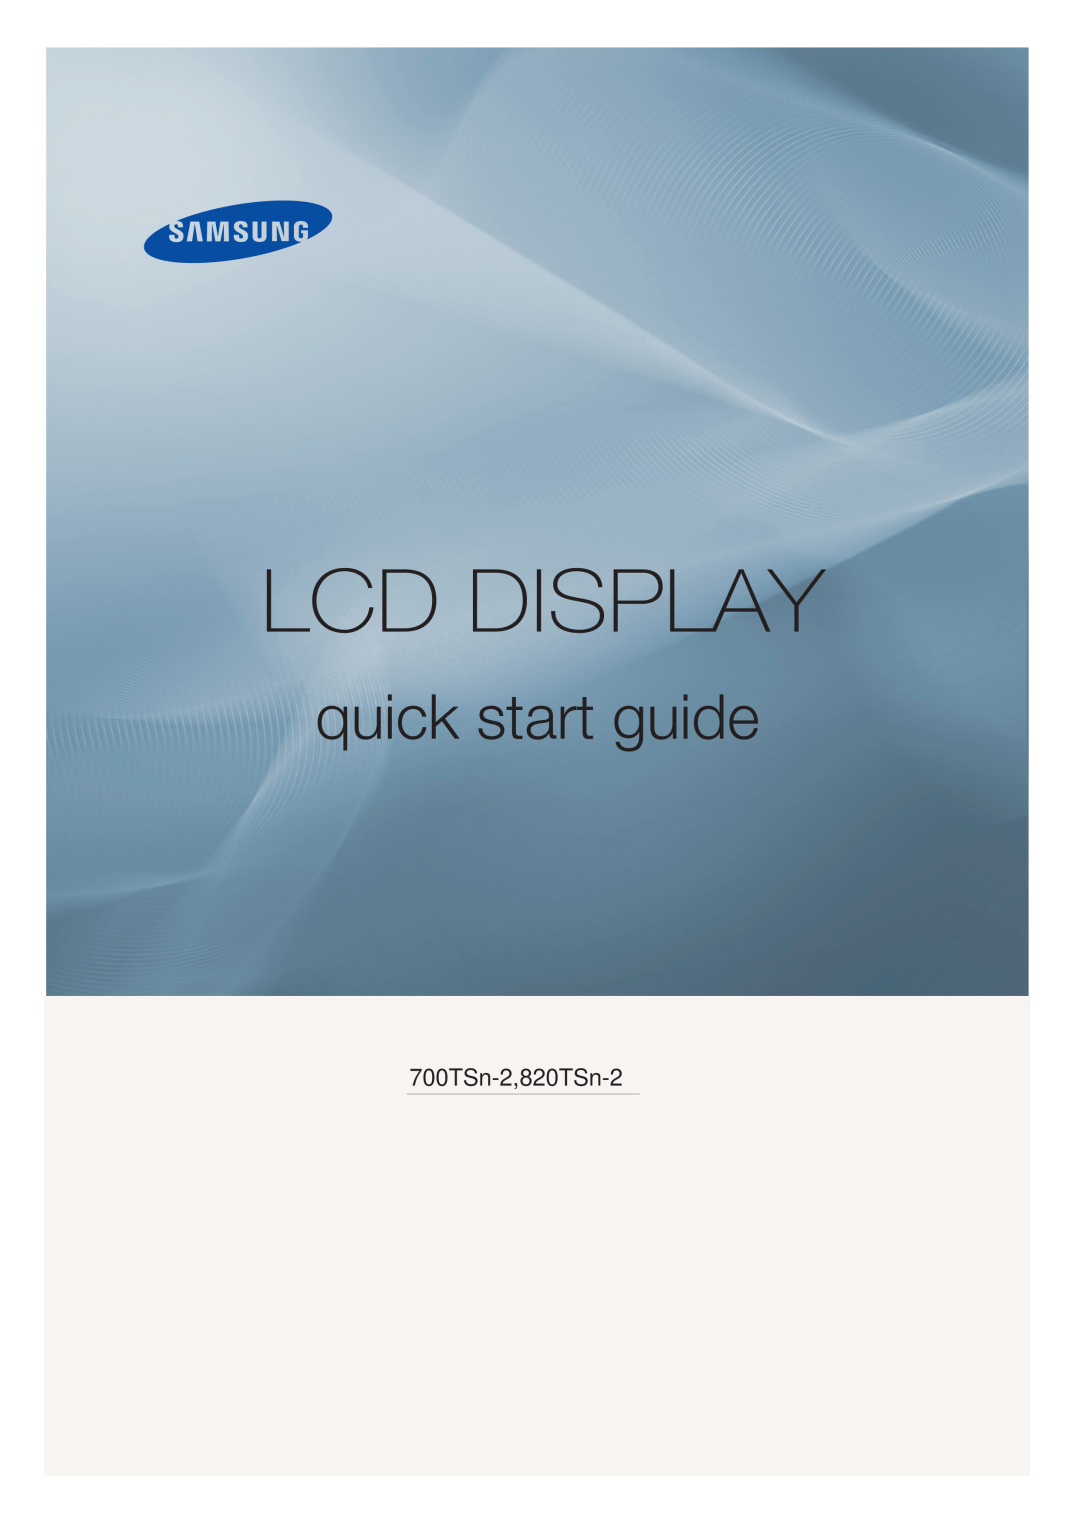 Samsung LH82TCUMBG/EN, LH70TCUMBG/EN, LH70TCSMBG/EN manual Lcd Display, quick start guide, 700TSn-2,820TSn-2 